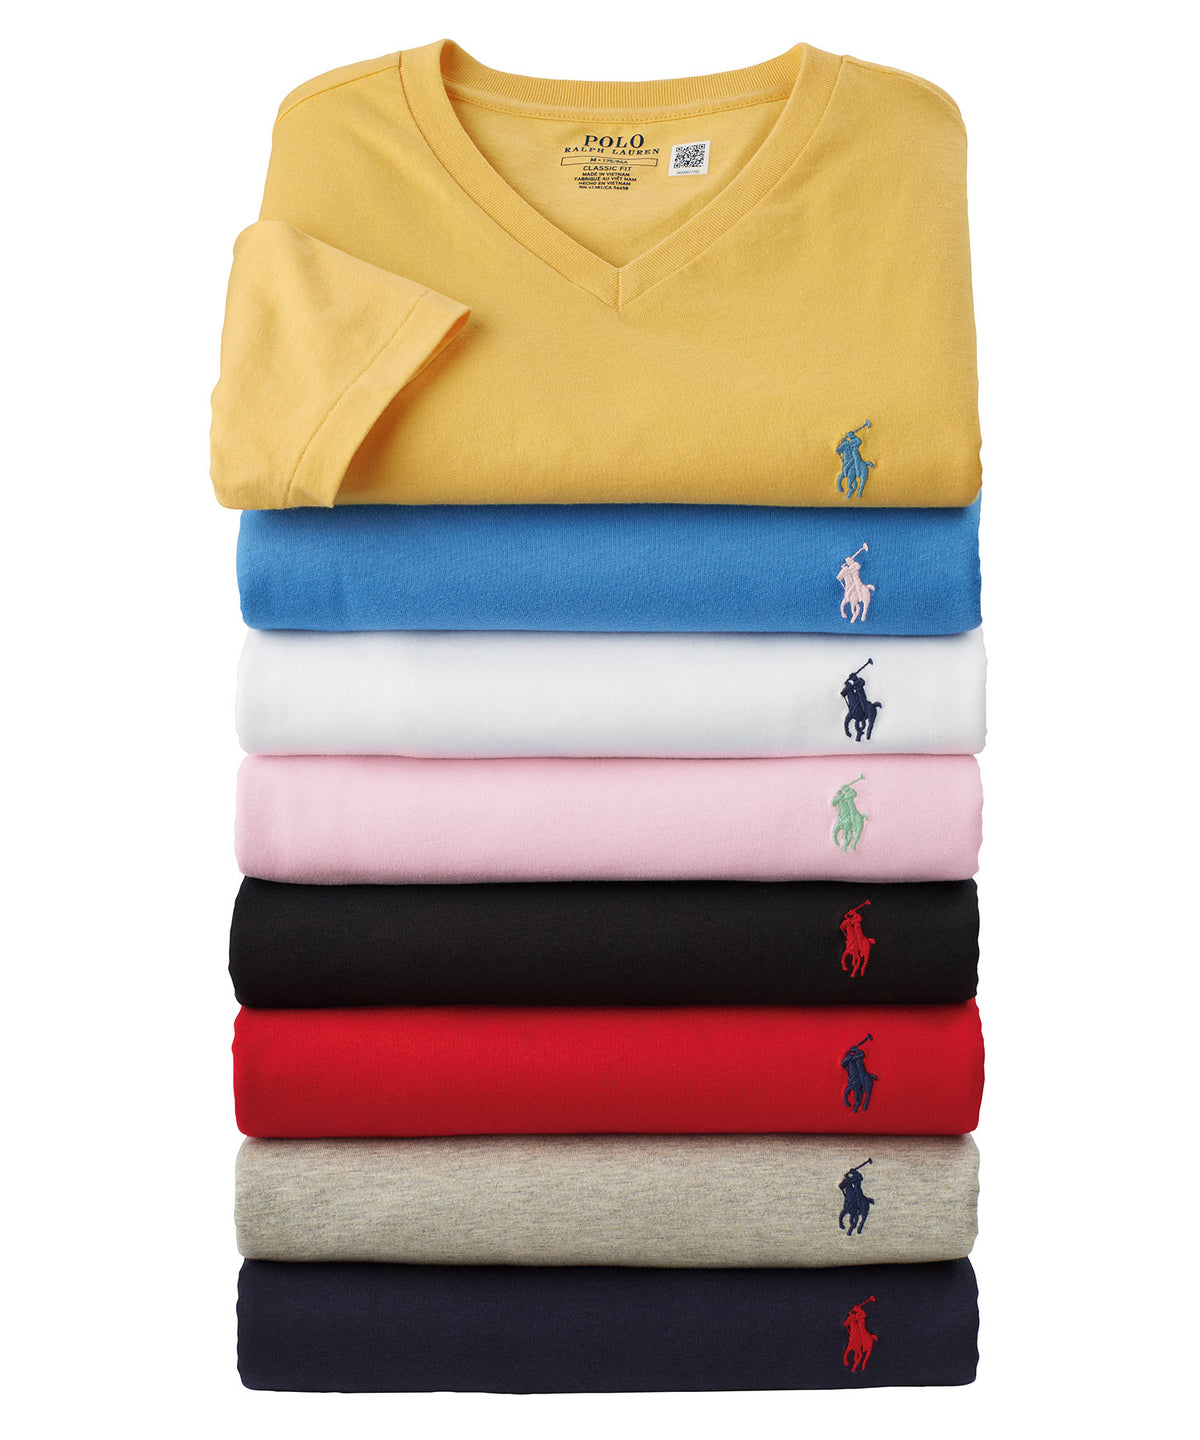 Polo Ralph Lauren Short Sleeve V-Neck Tee Shirt